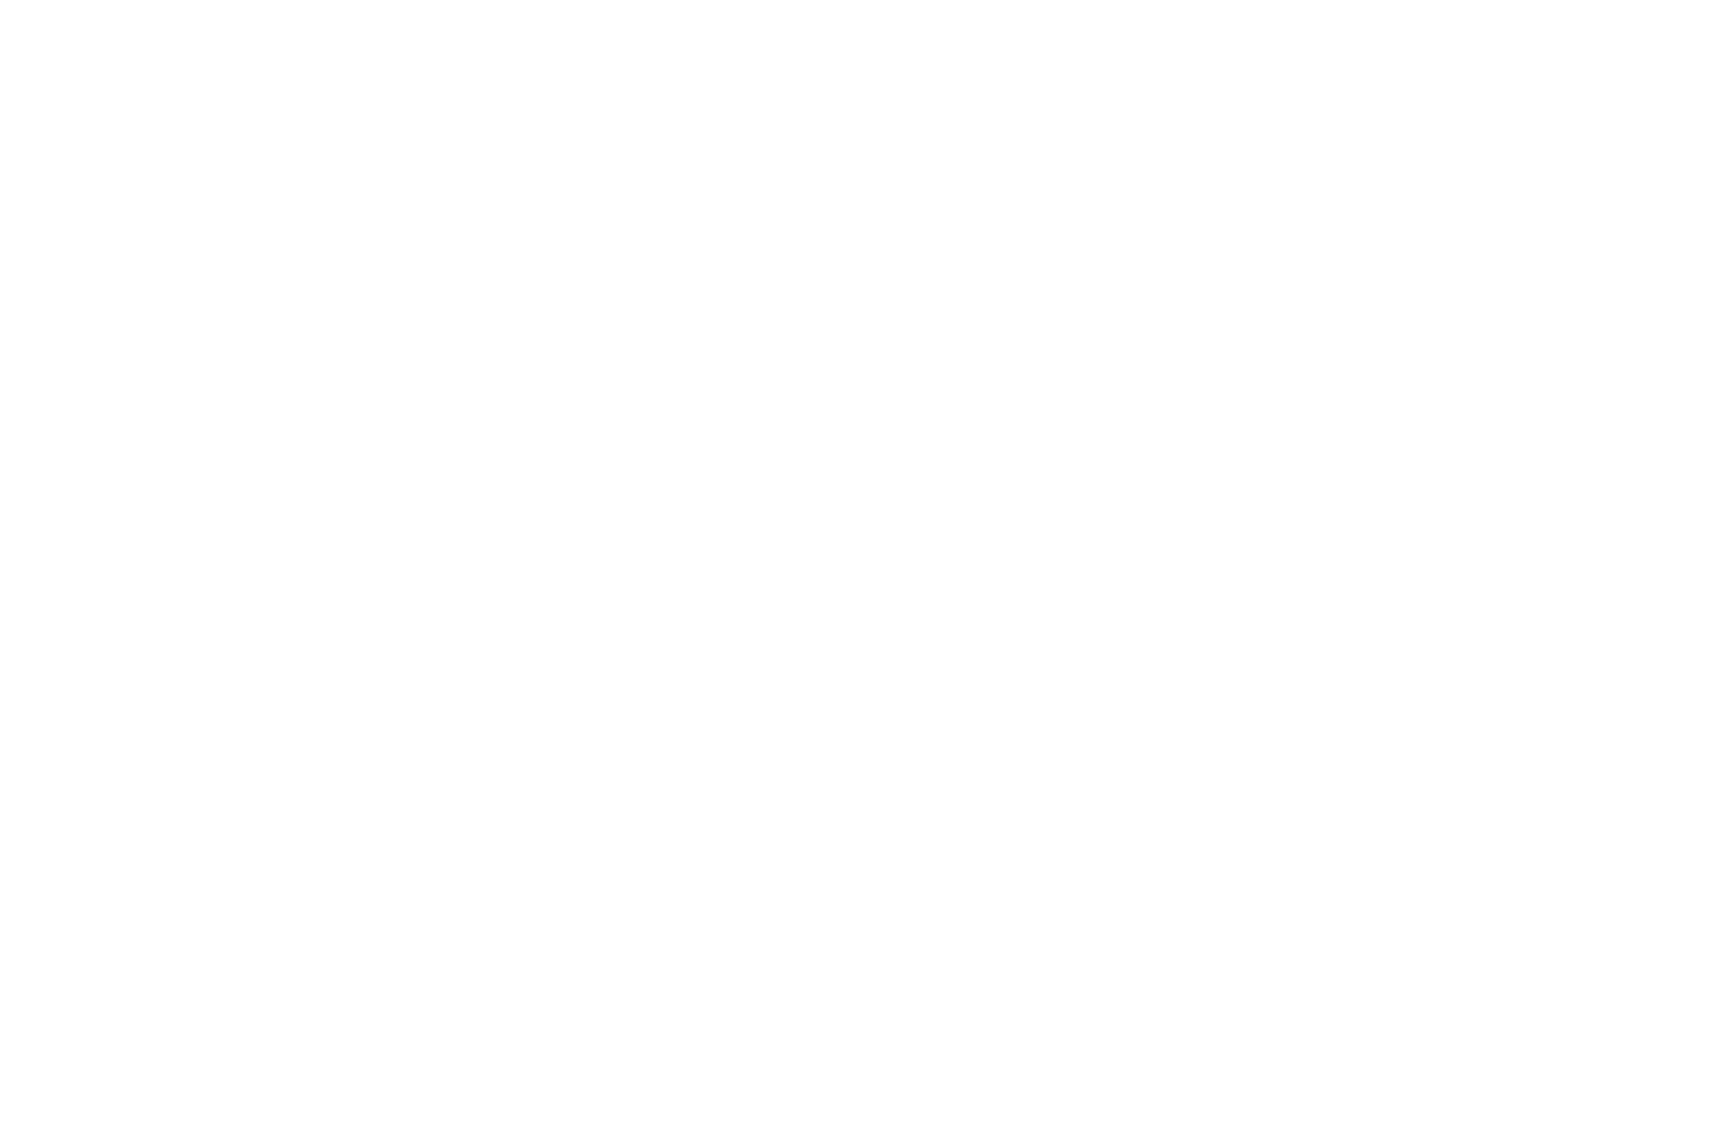 Kamehameha Logo - The King Kamehameha Golf Club